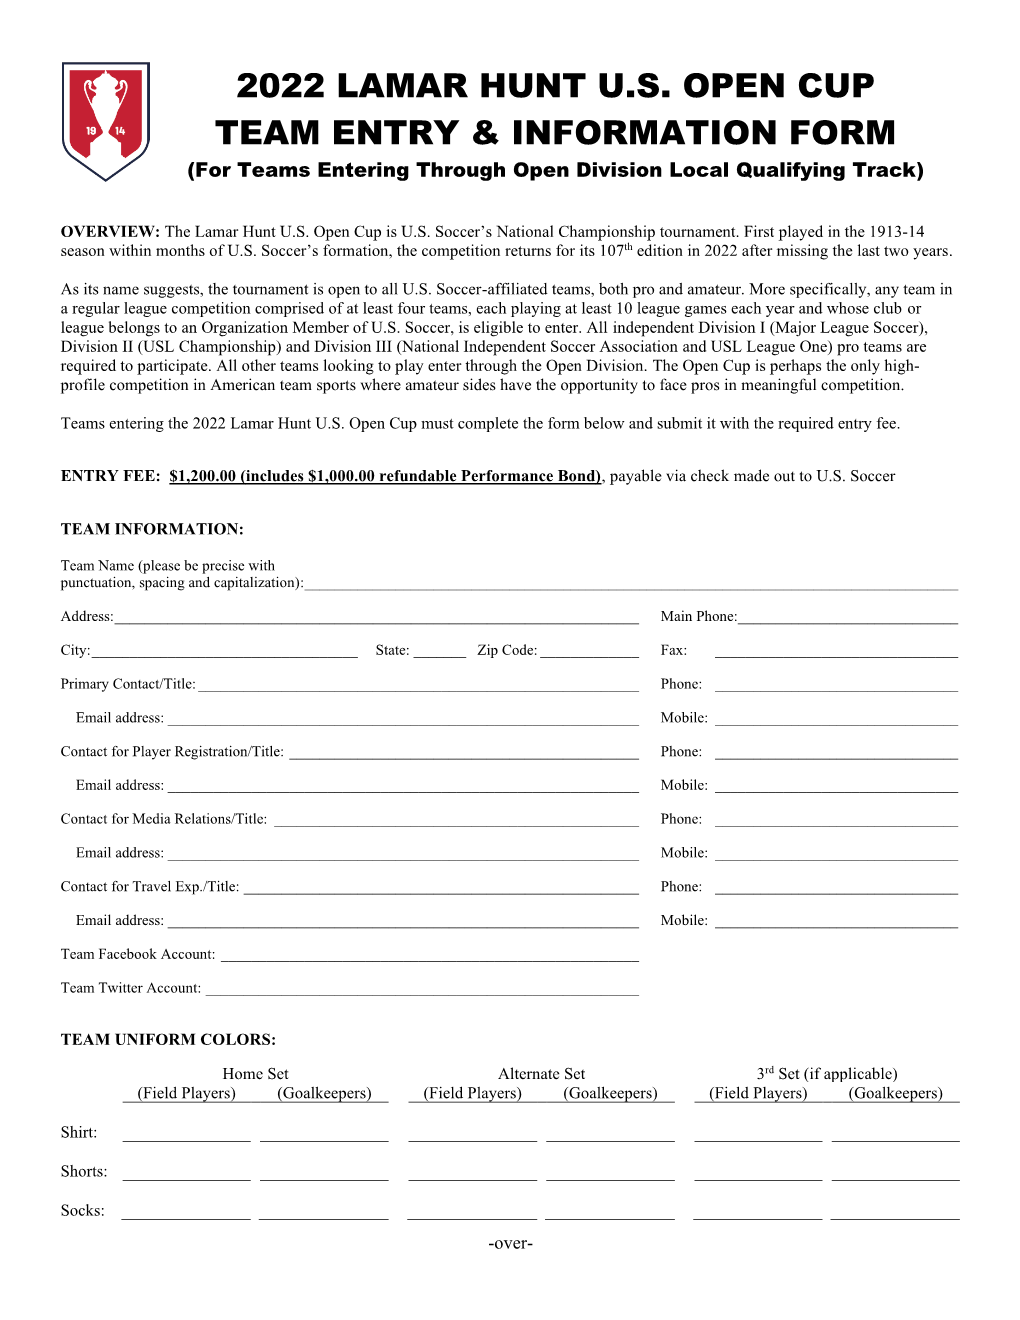 2022 Lamar Hunt U.S. Open Cup Team Entry & Information